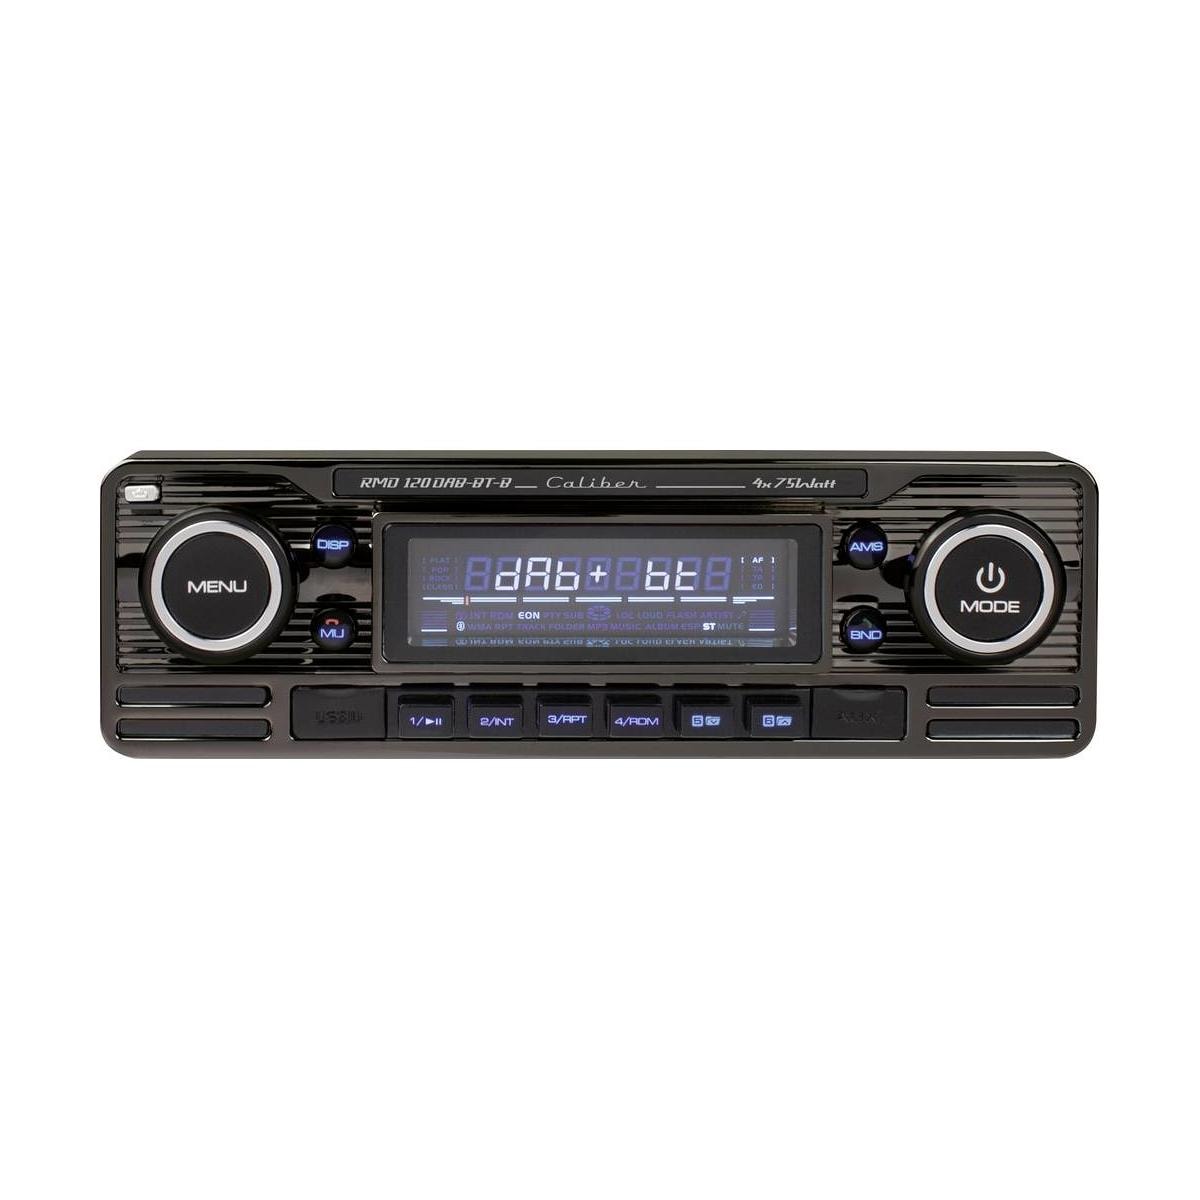 Caliber Audio Technology RMD120DAB-BT-B Autoradio Bluetooth MP3